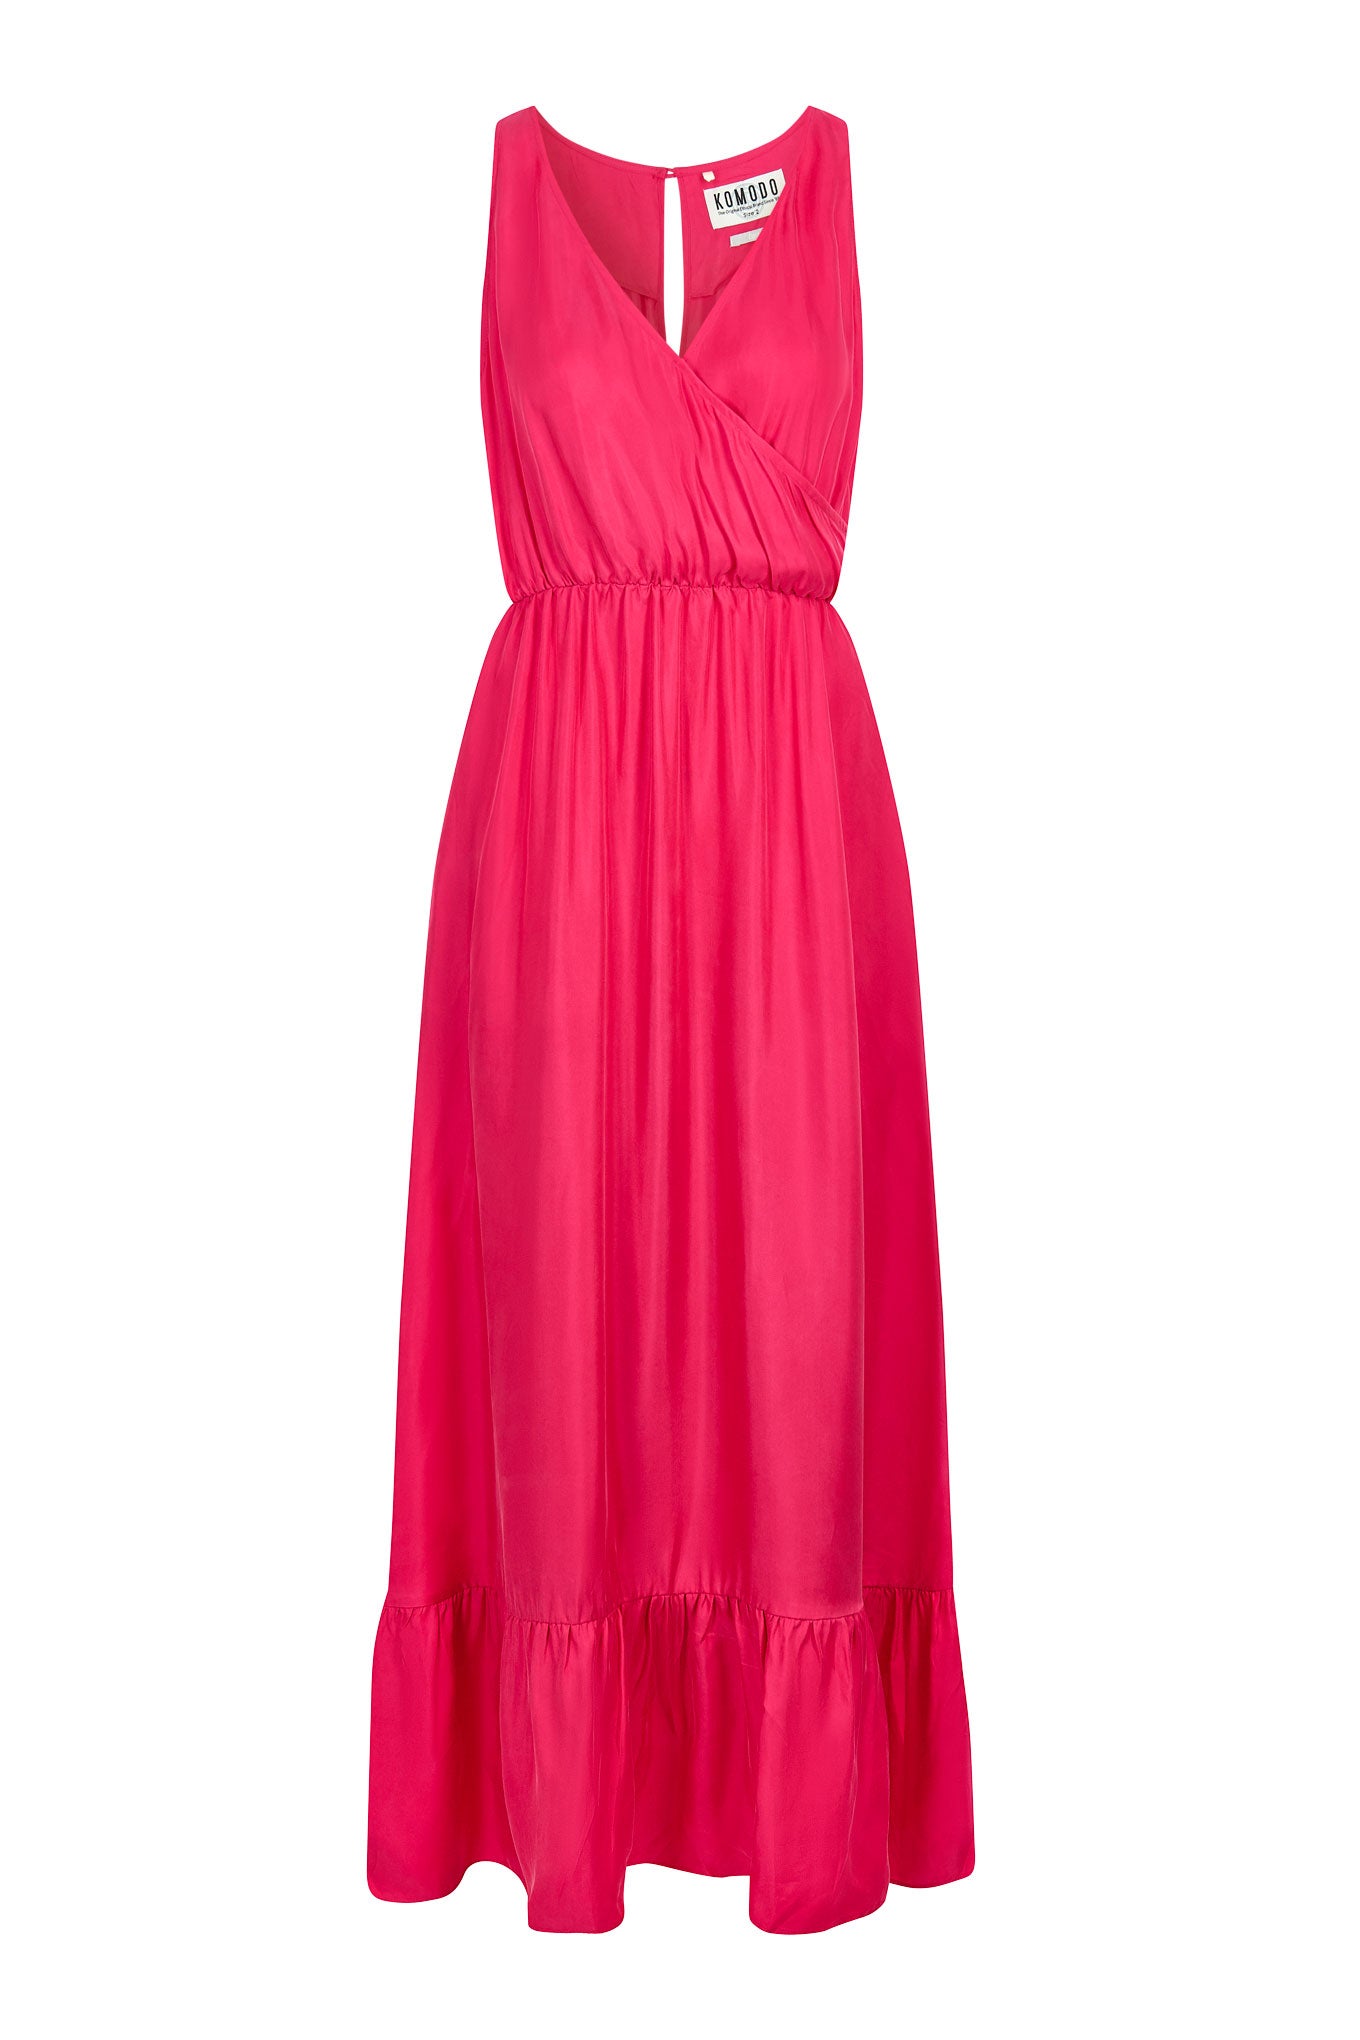 WHIRLYGIG Cupro Maxi Dress fuschia pink